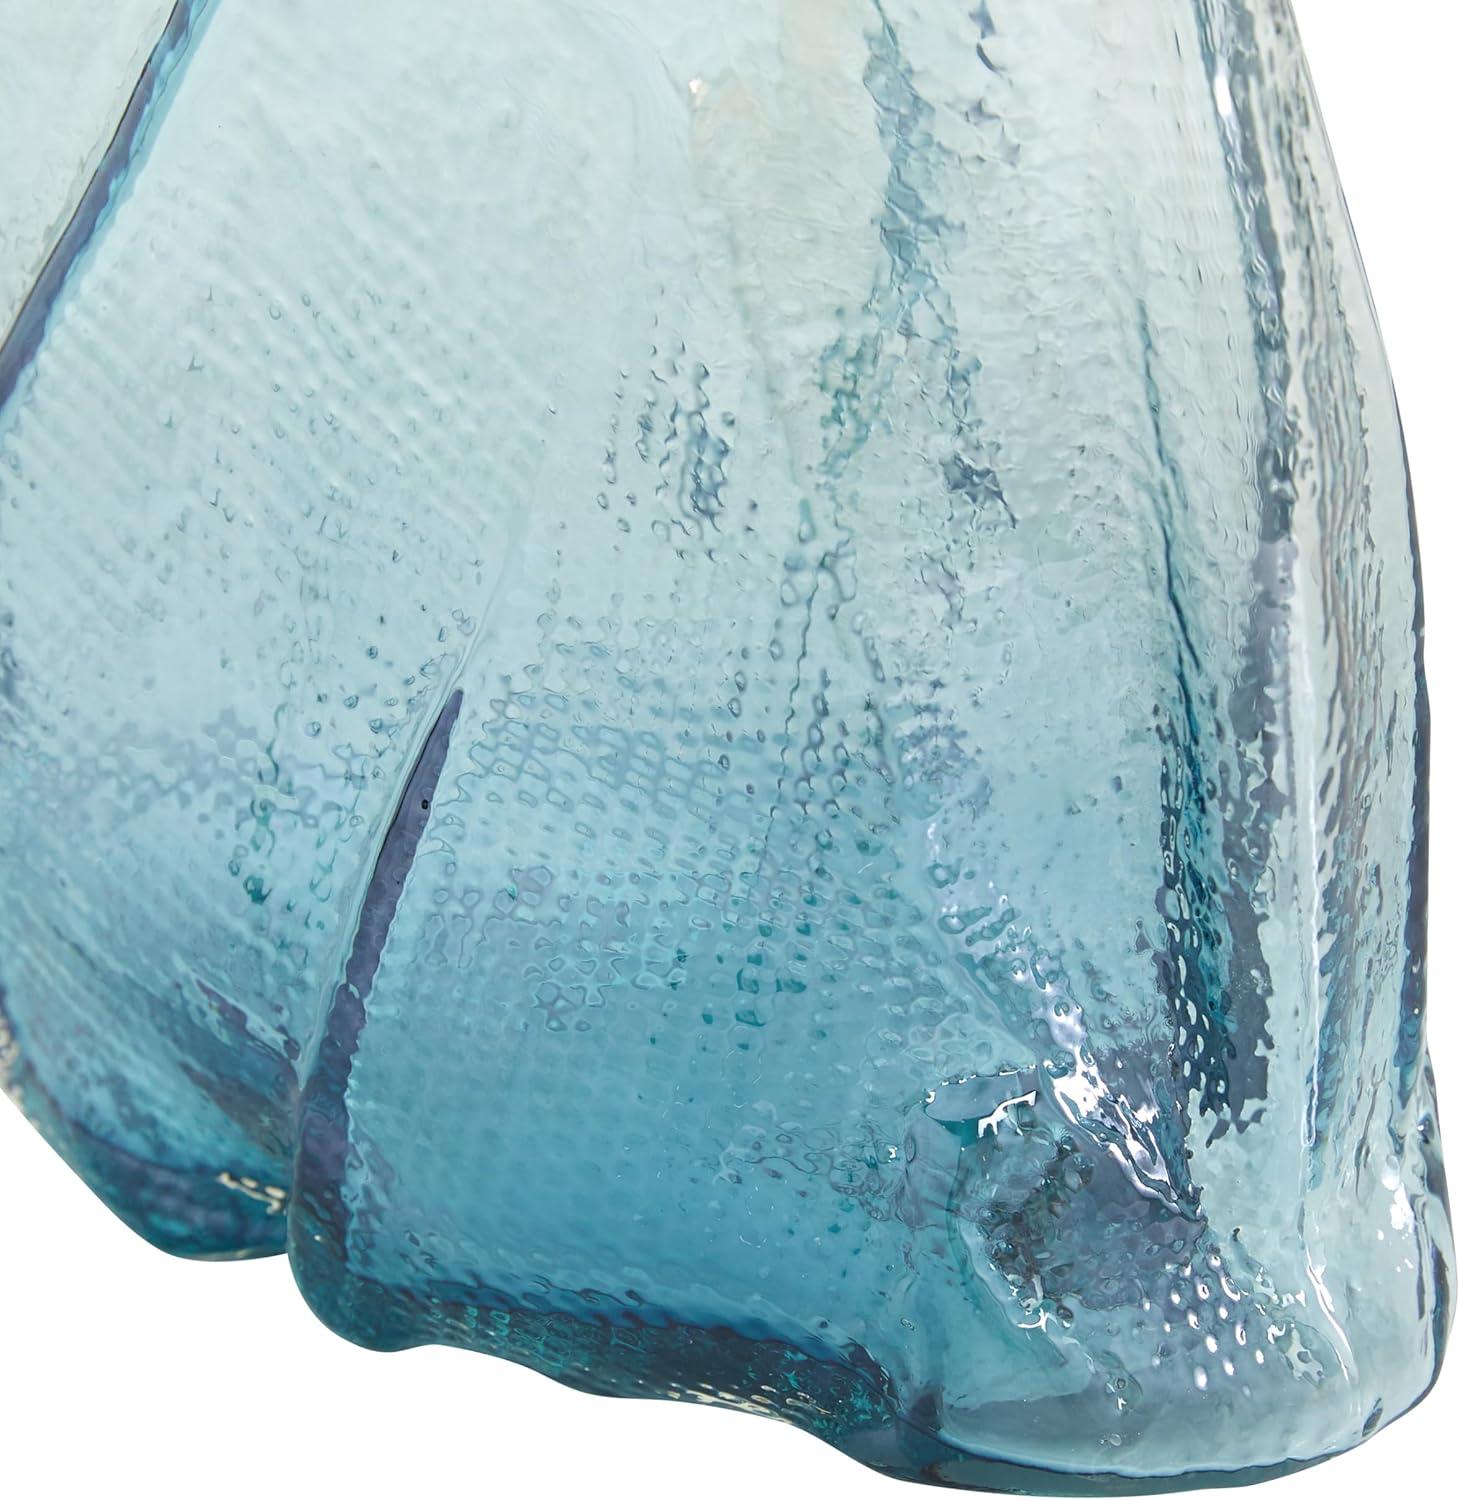 Aqua Glass Elegance 10" x 5" x 12" Bouquet Table Vase